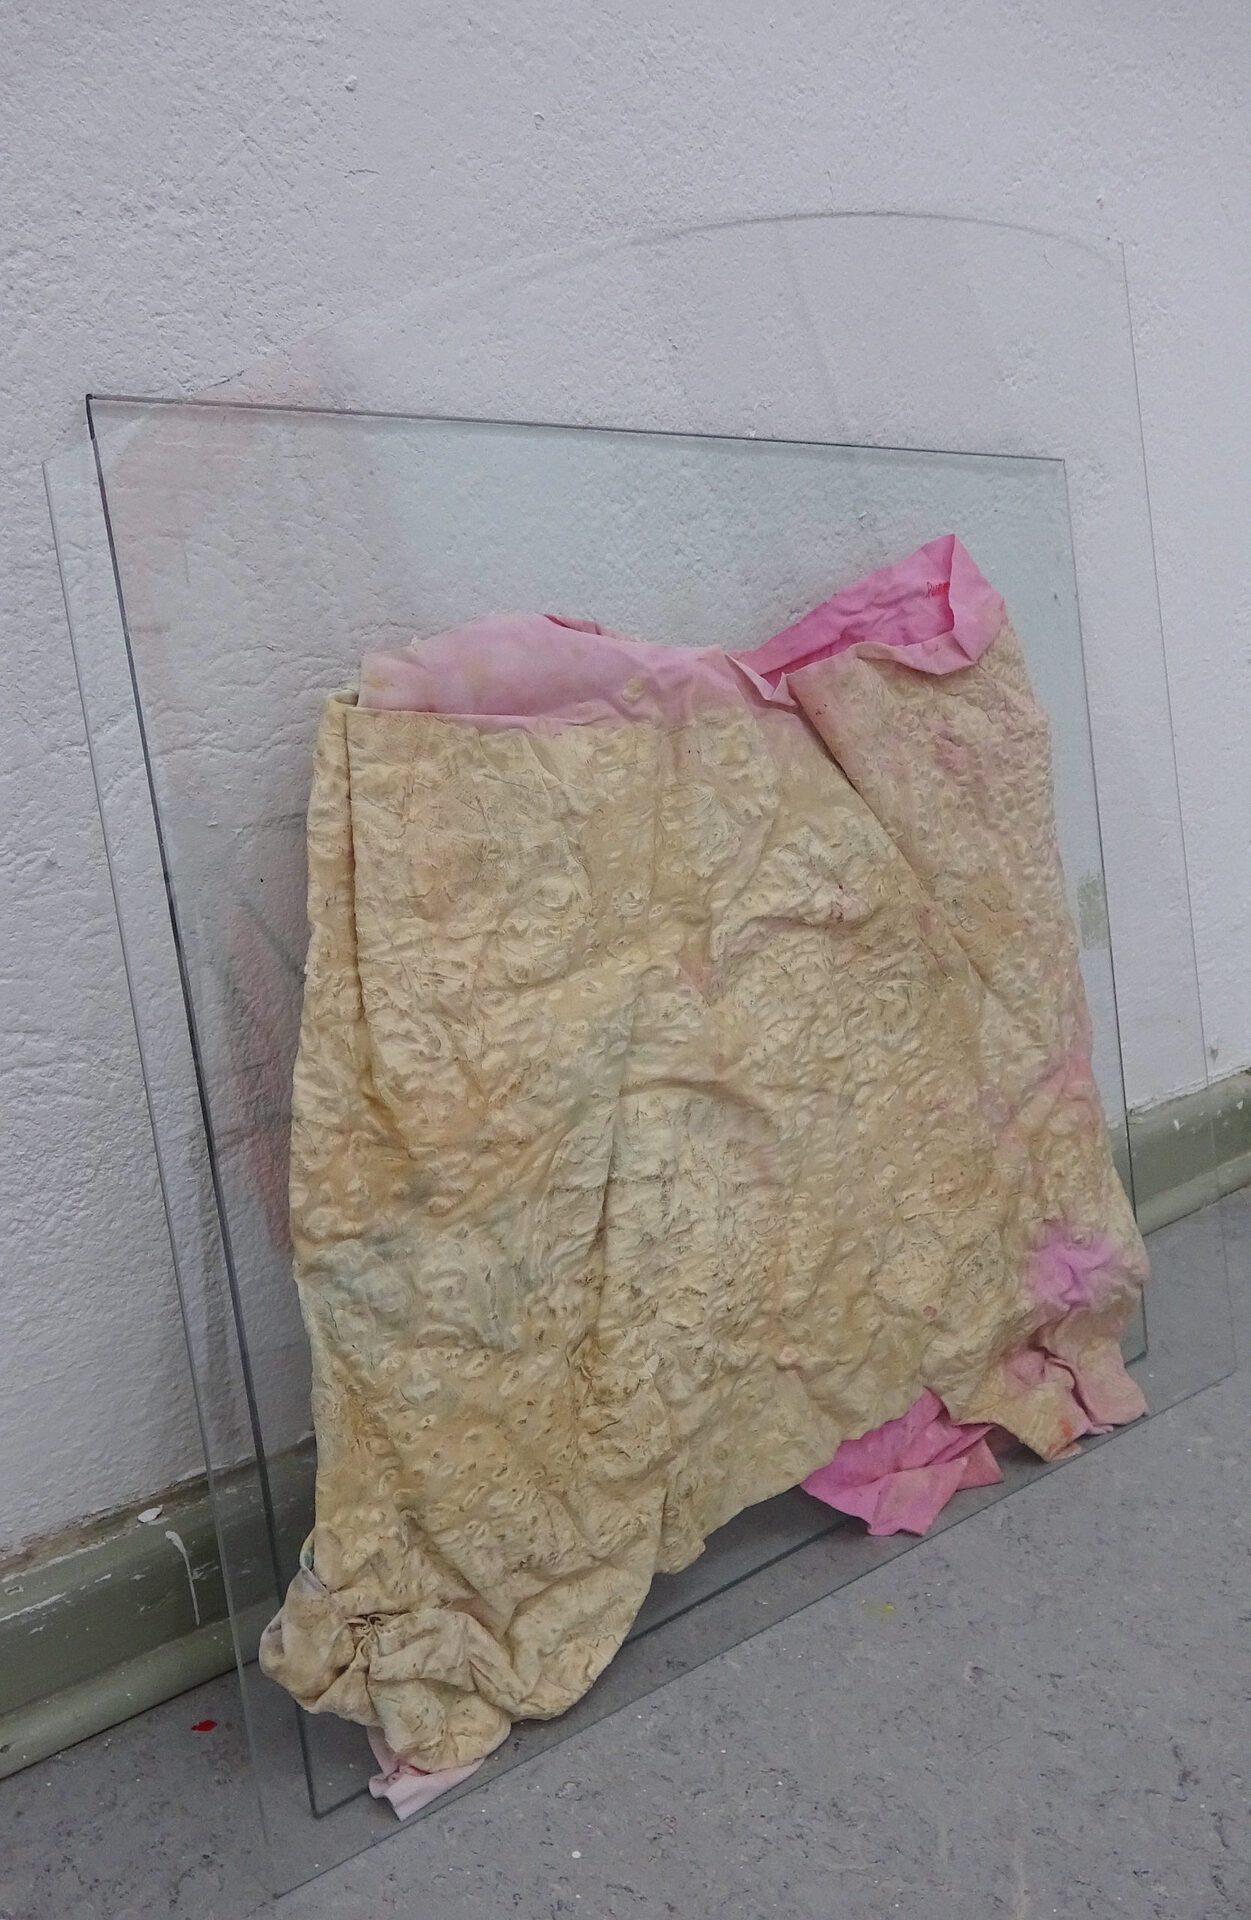 Monika Dorniak, The Human Anatomy Is Adorning Itself, 2009, acryl on textile with glass, 47 x 37 x 4 cm